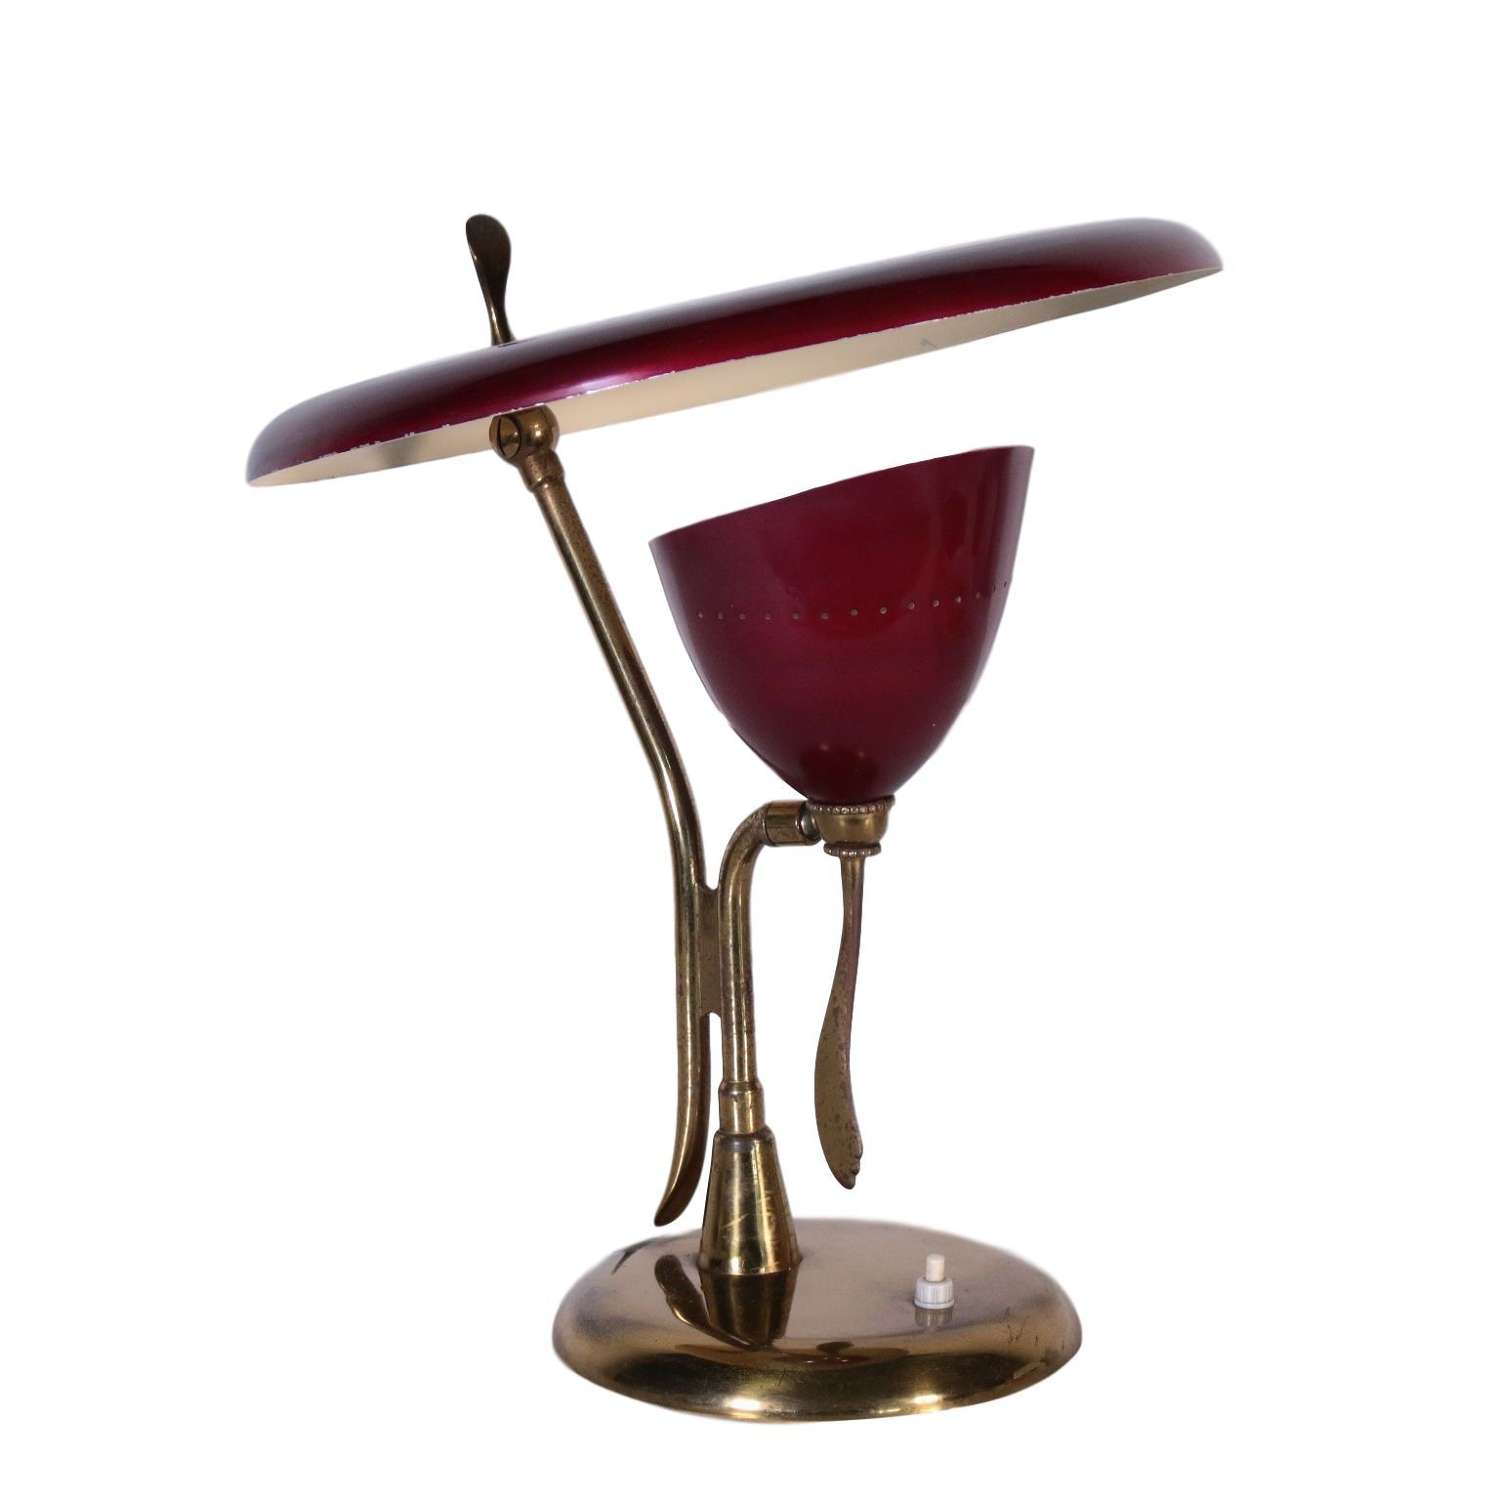 Oscar Torlasco table lamp